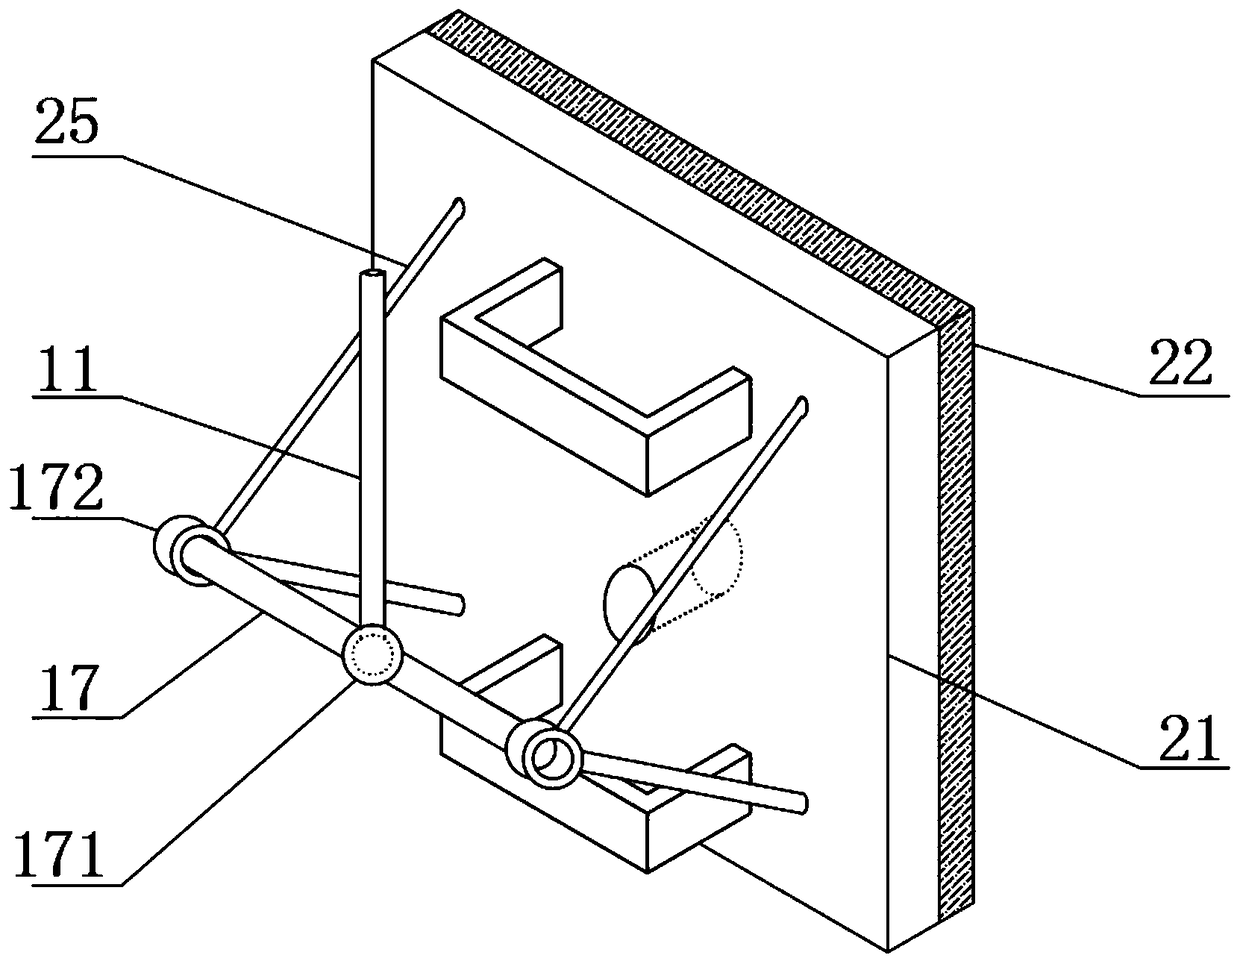 Hoisting device and hoisting method for prefabricated panel